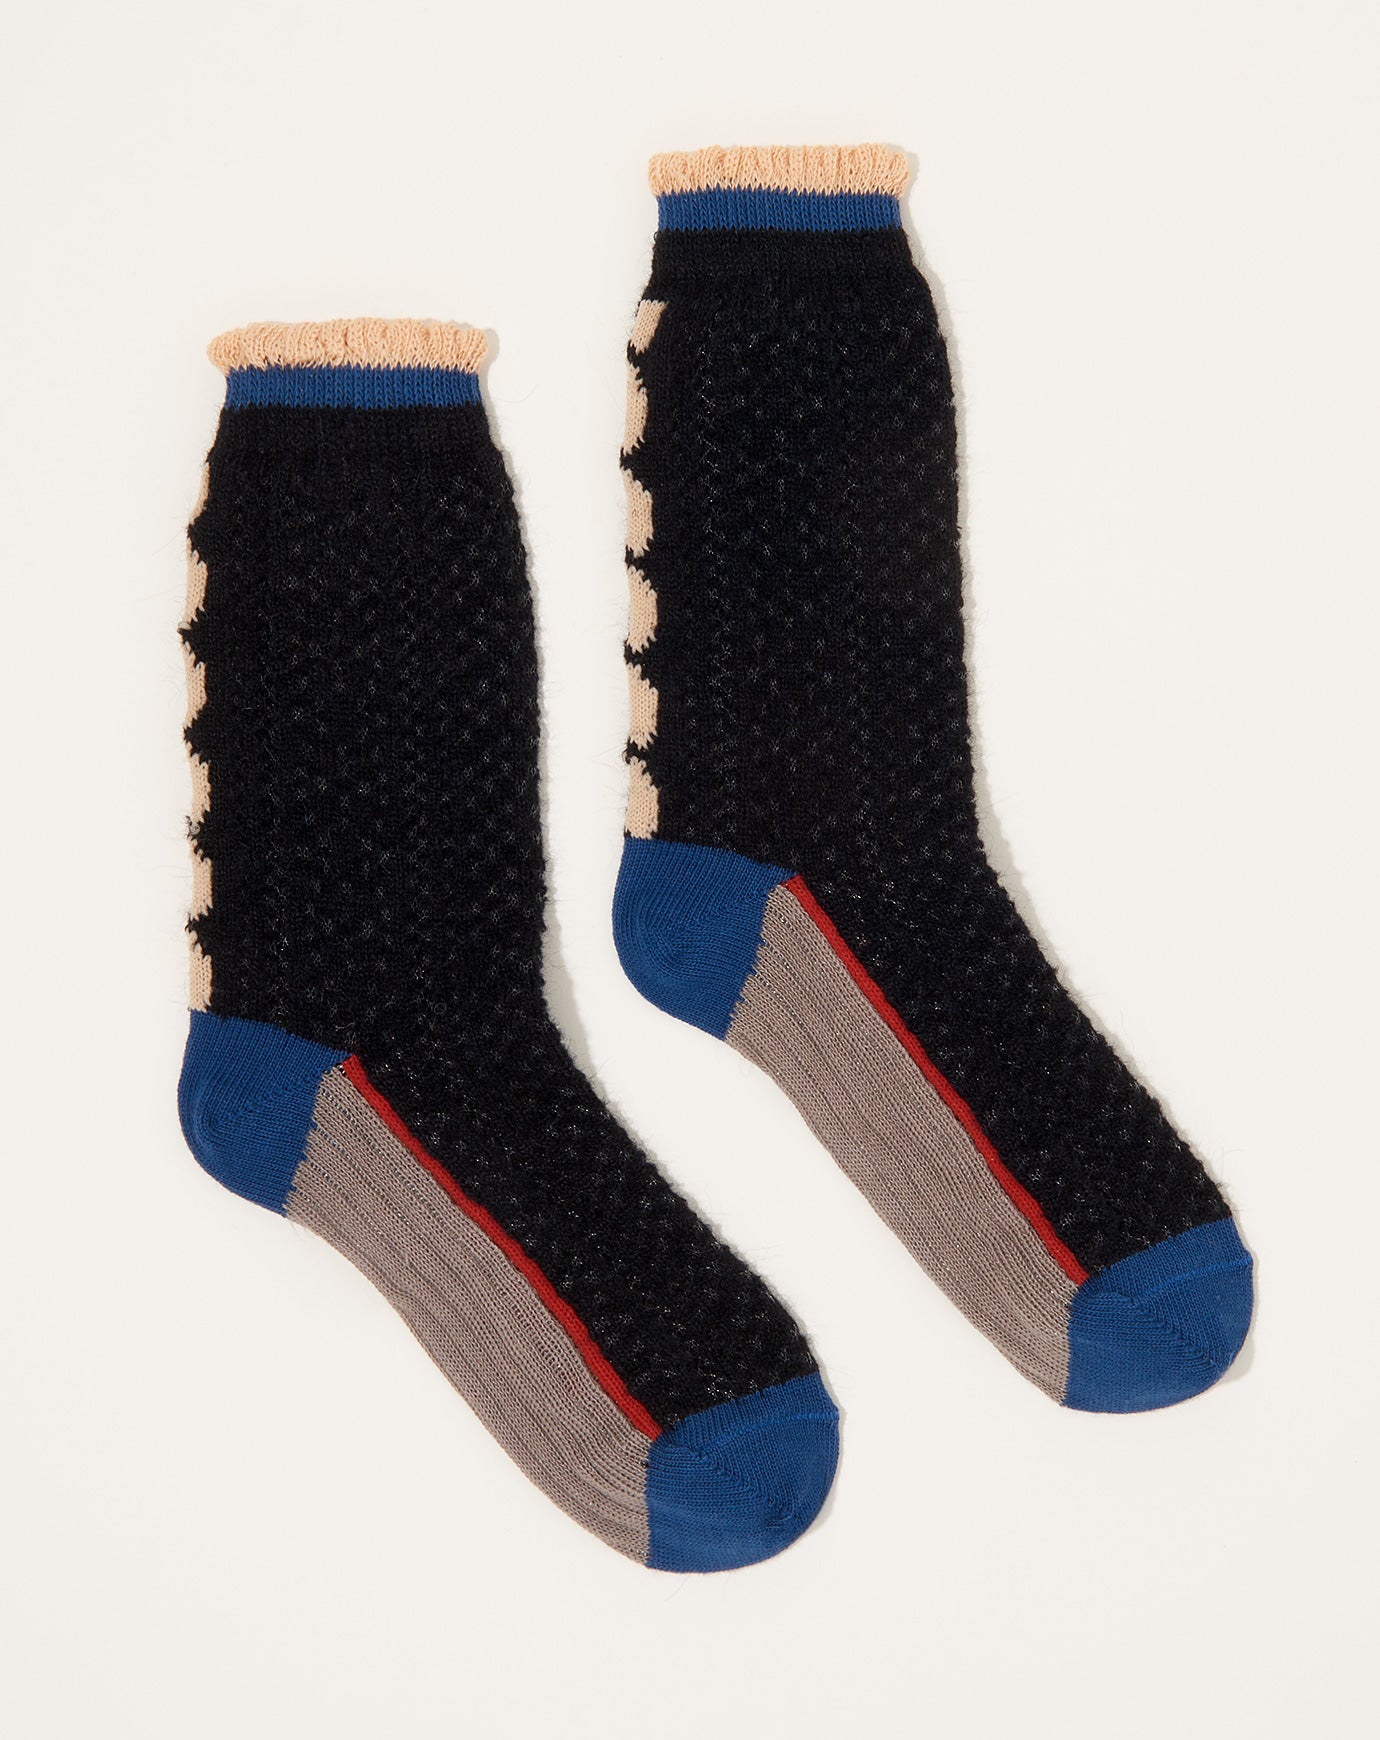 Exquisite J Mohair Simple Braid Socks in Navy